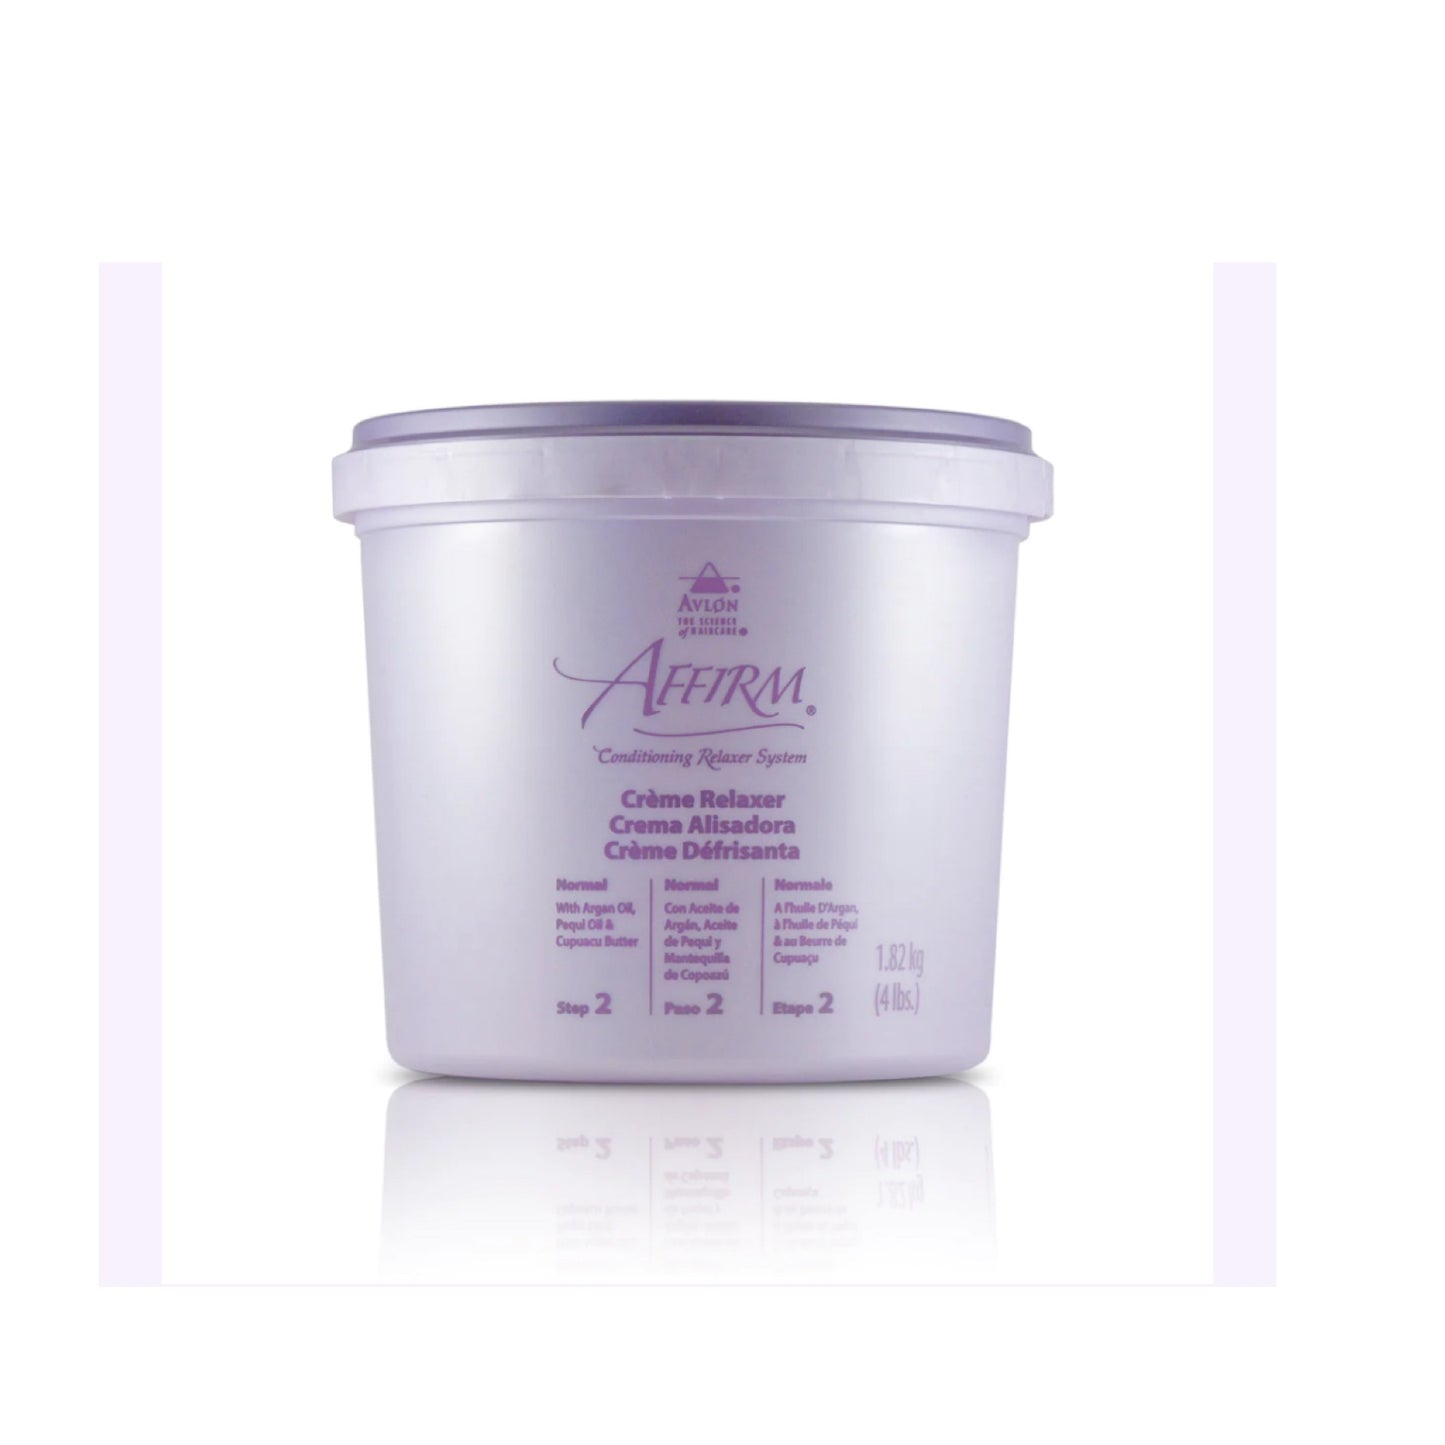 Avlon Affirm Crème Relaxer 1.82kg